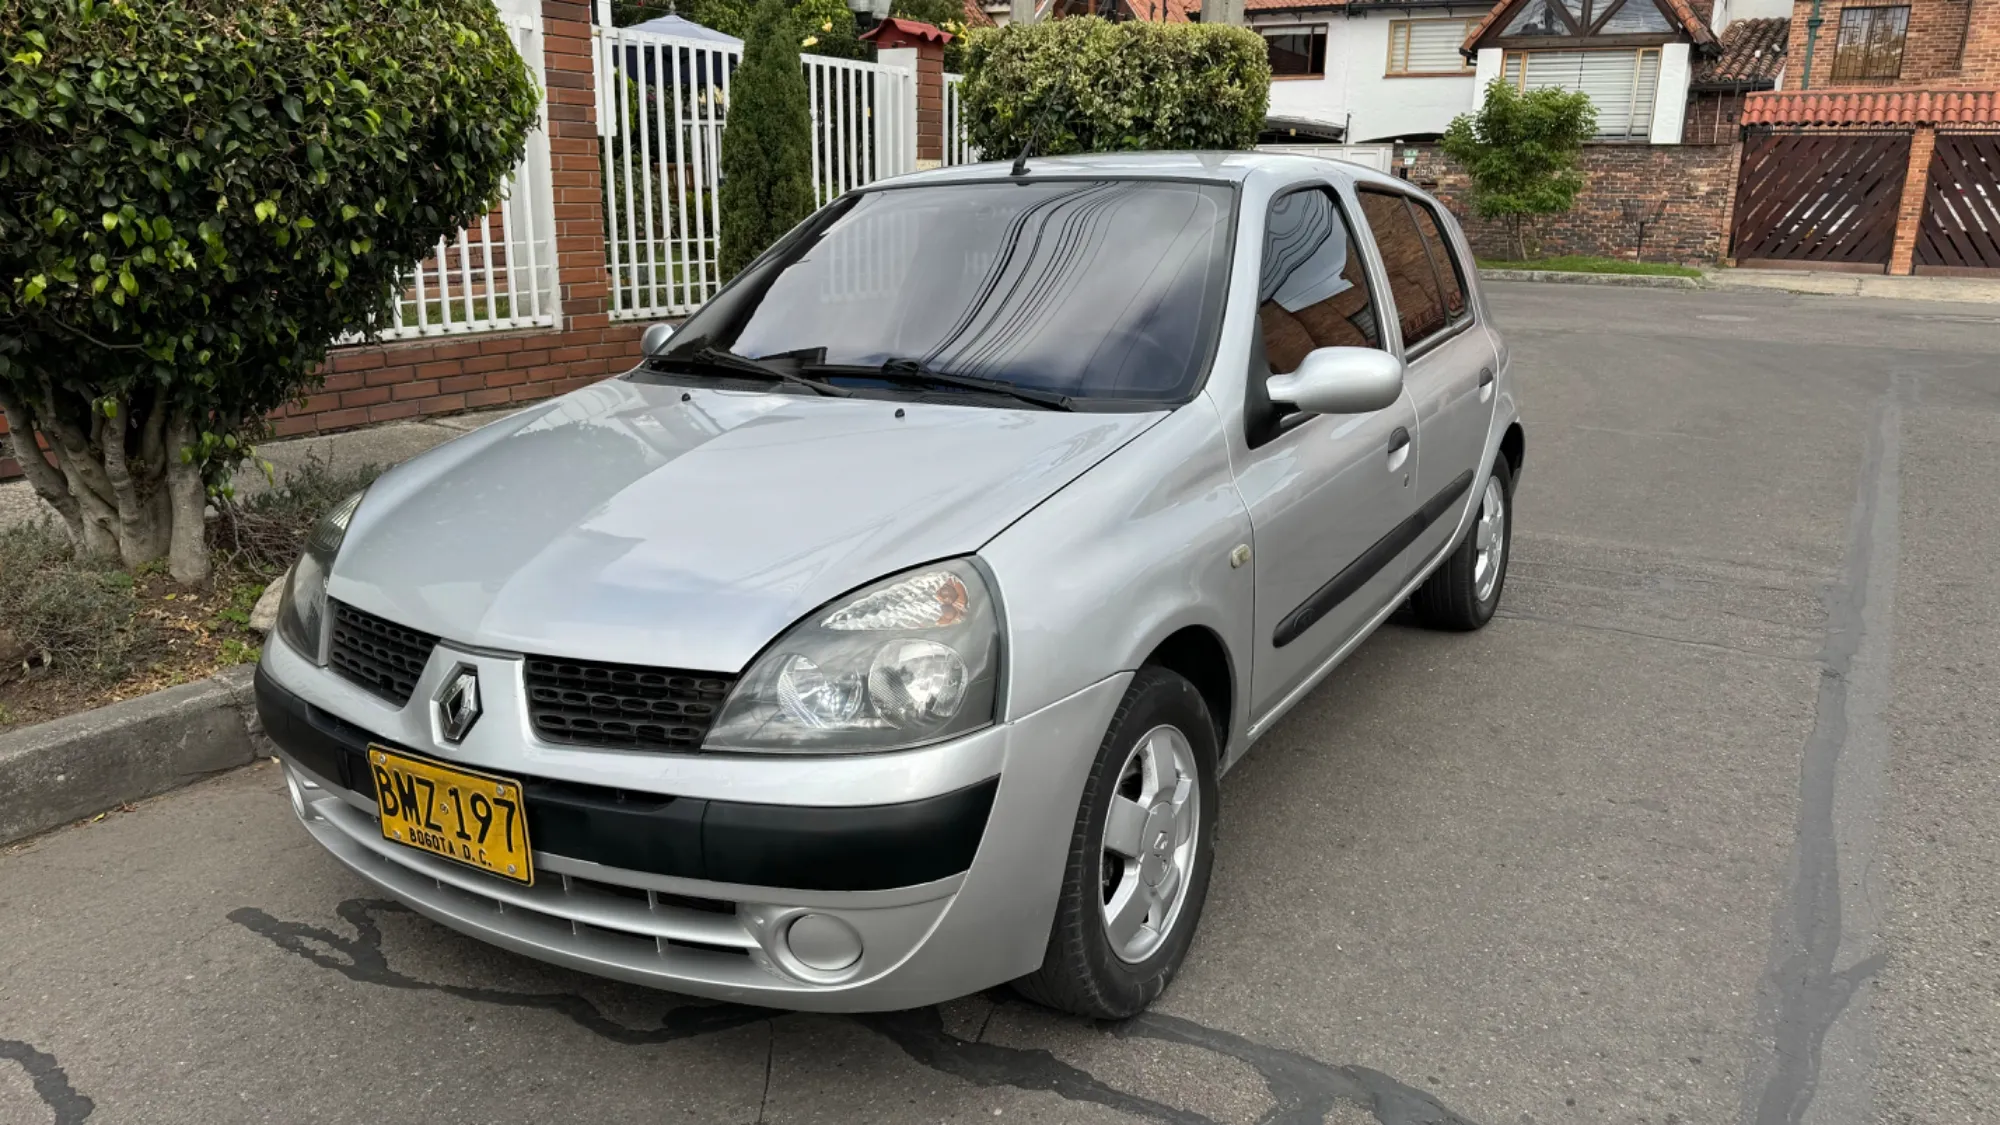 Renault clio 1.4 modelo 2004